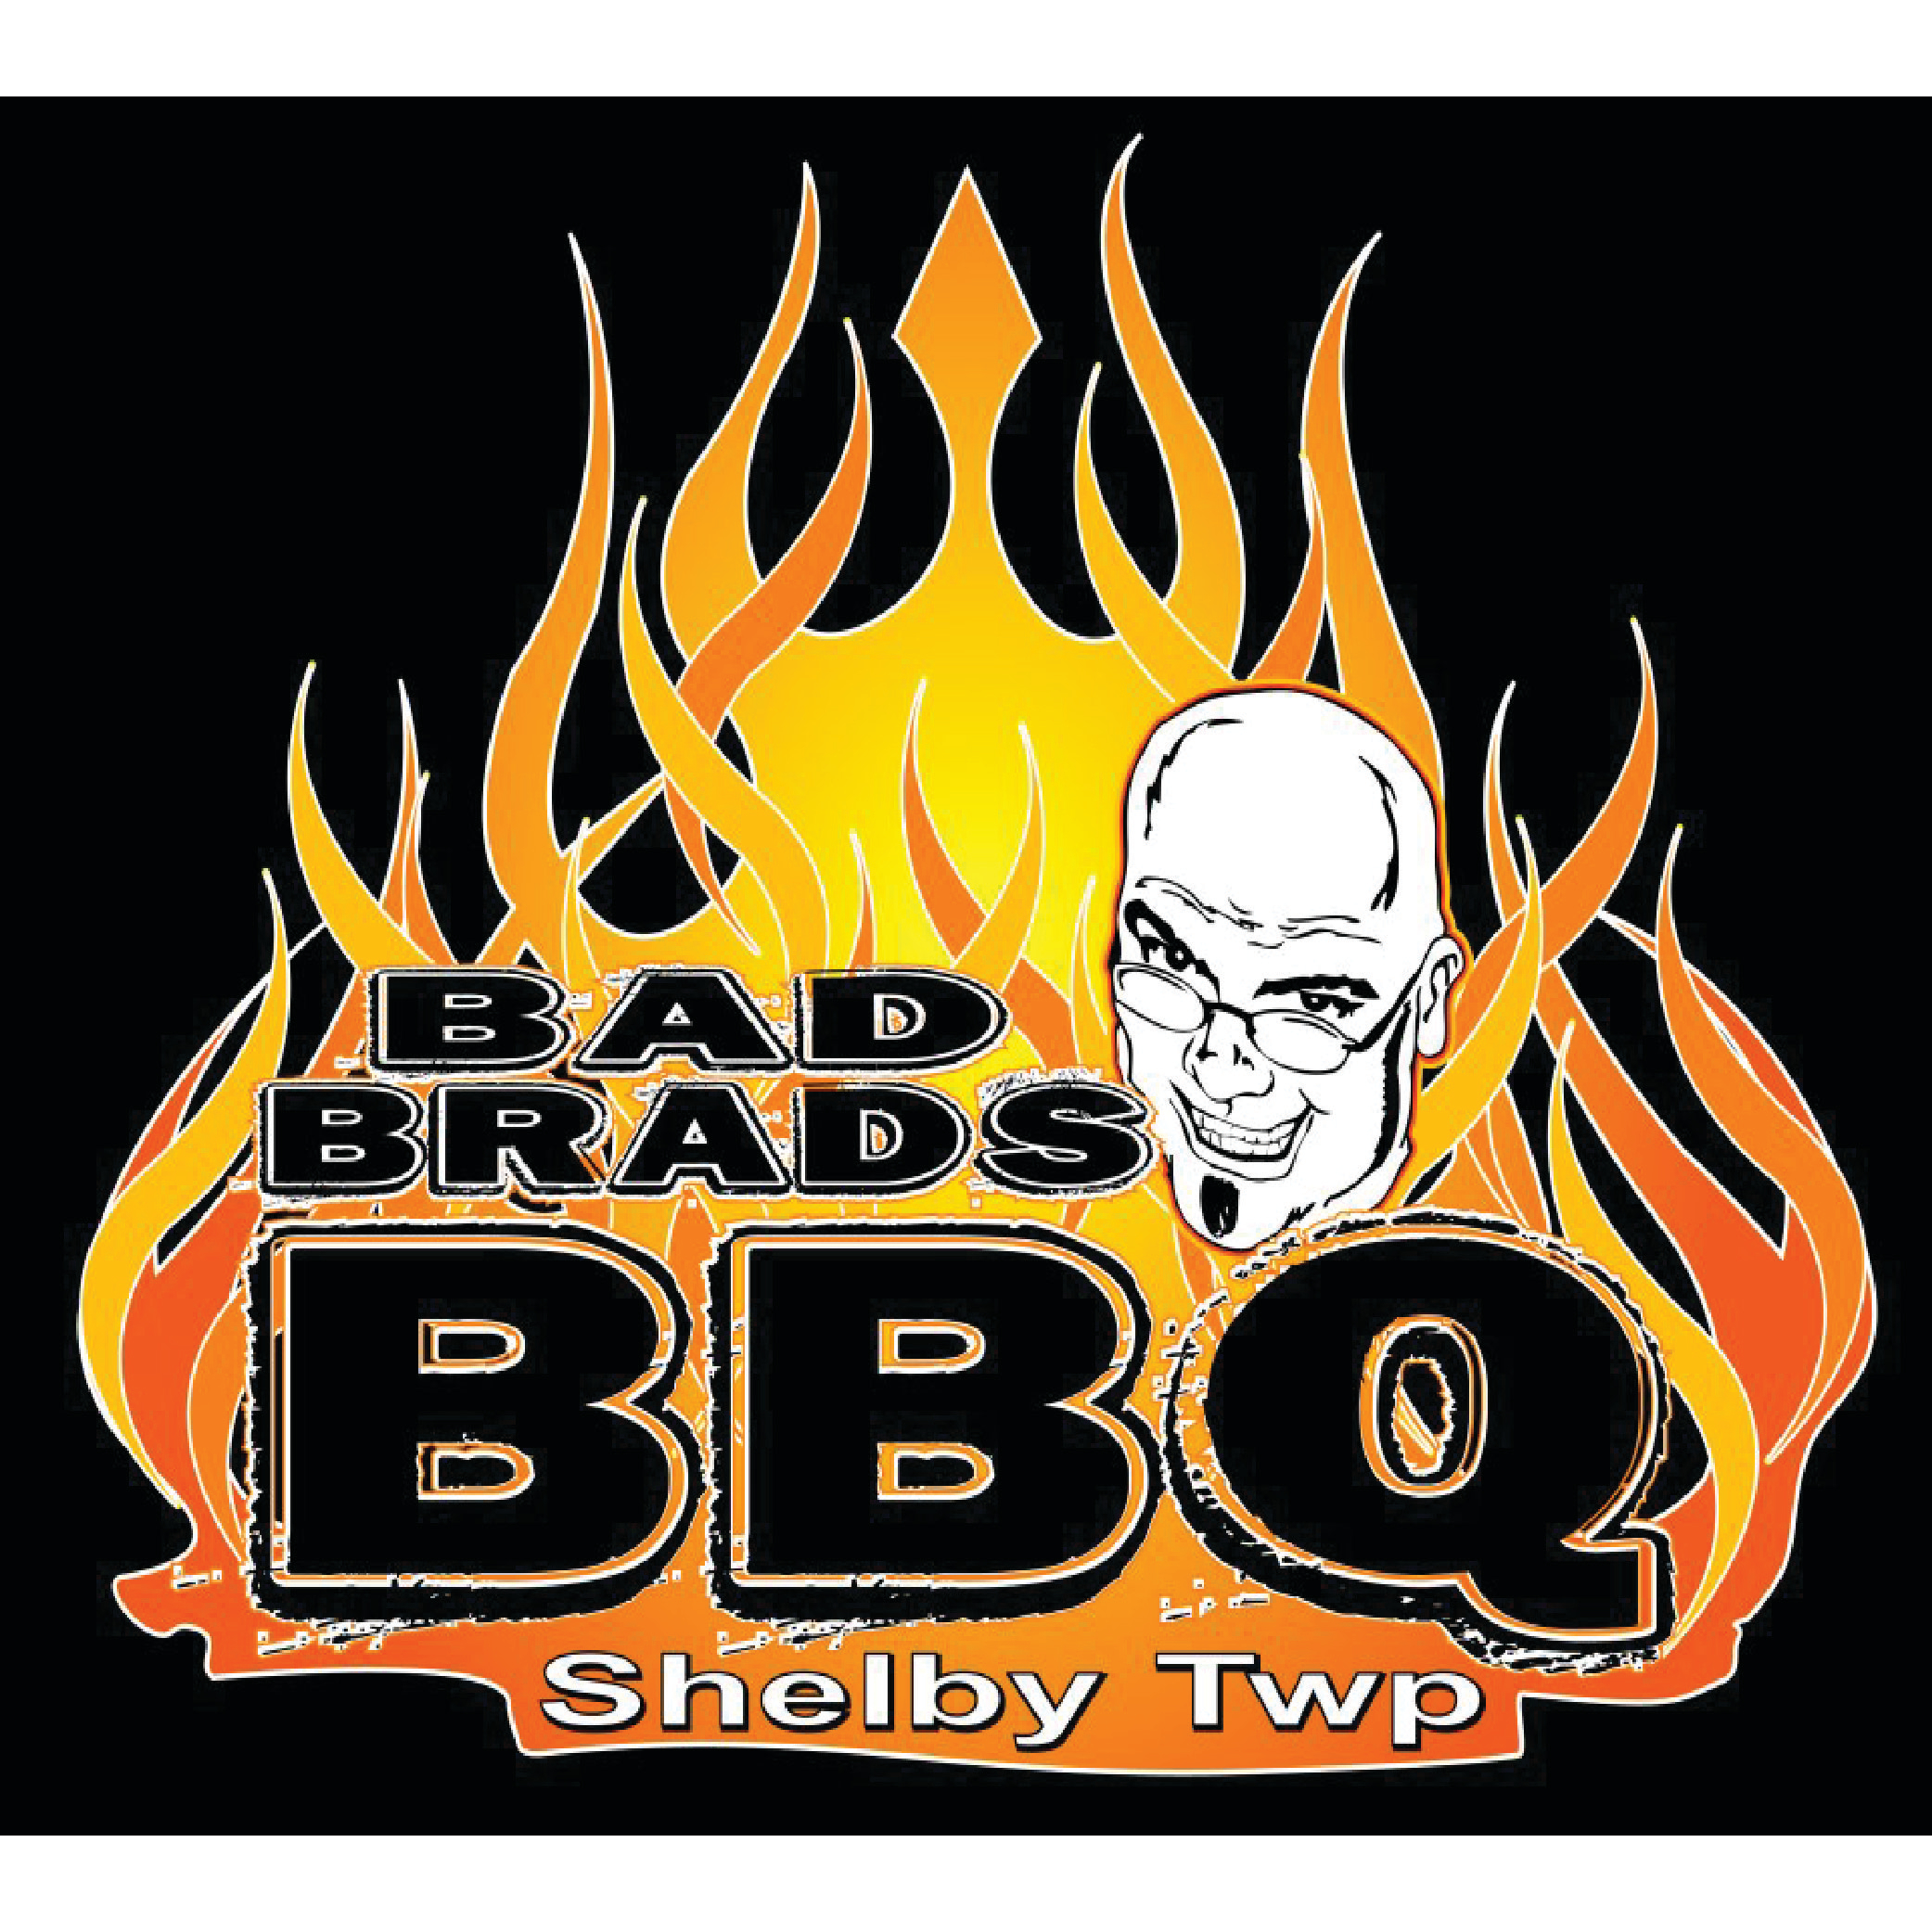 Bad Brads BBQ Photo